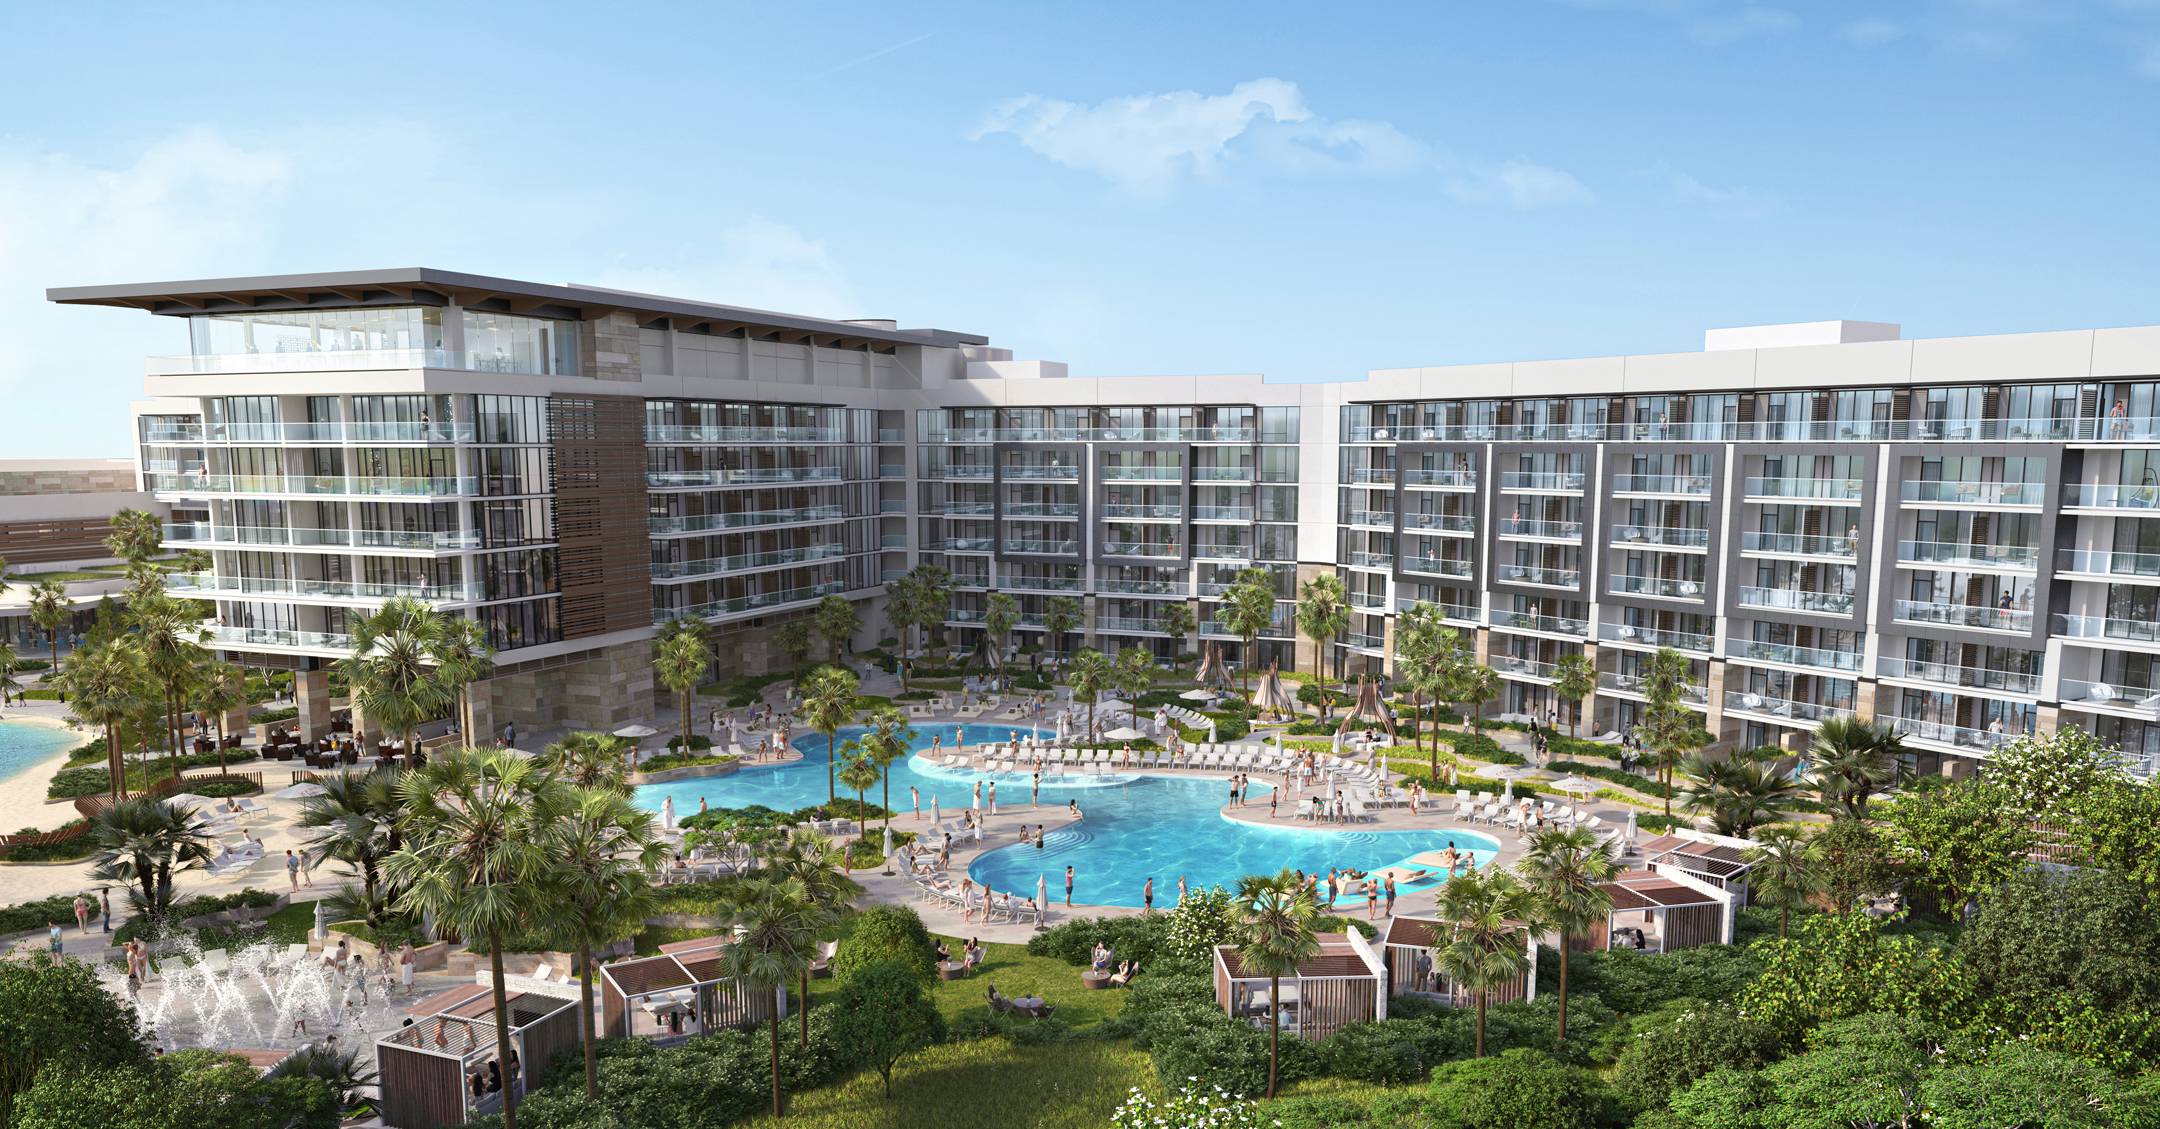 Evermore Orlando Resort overview